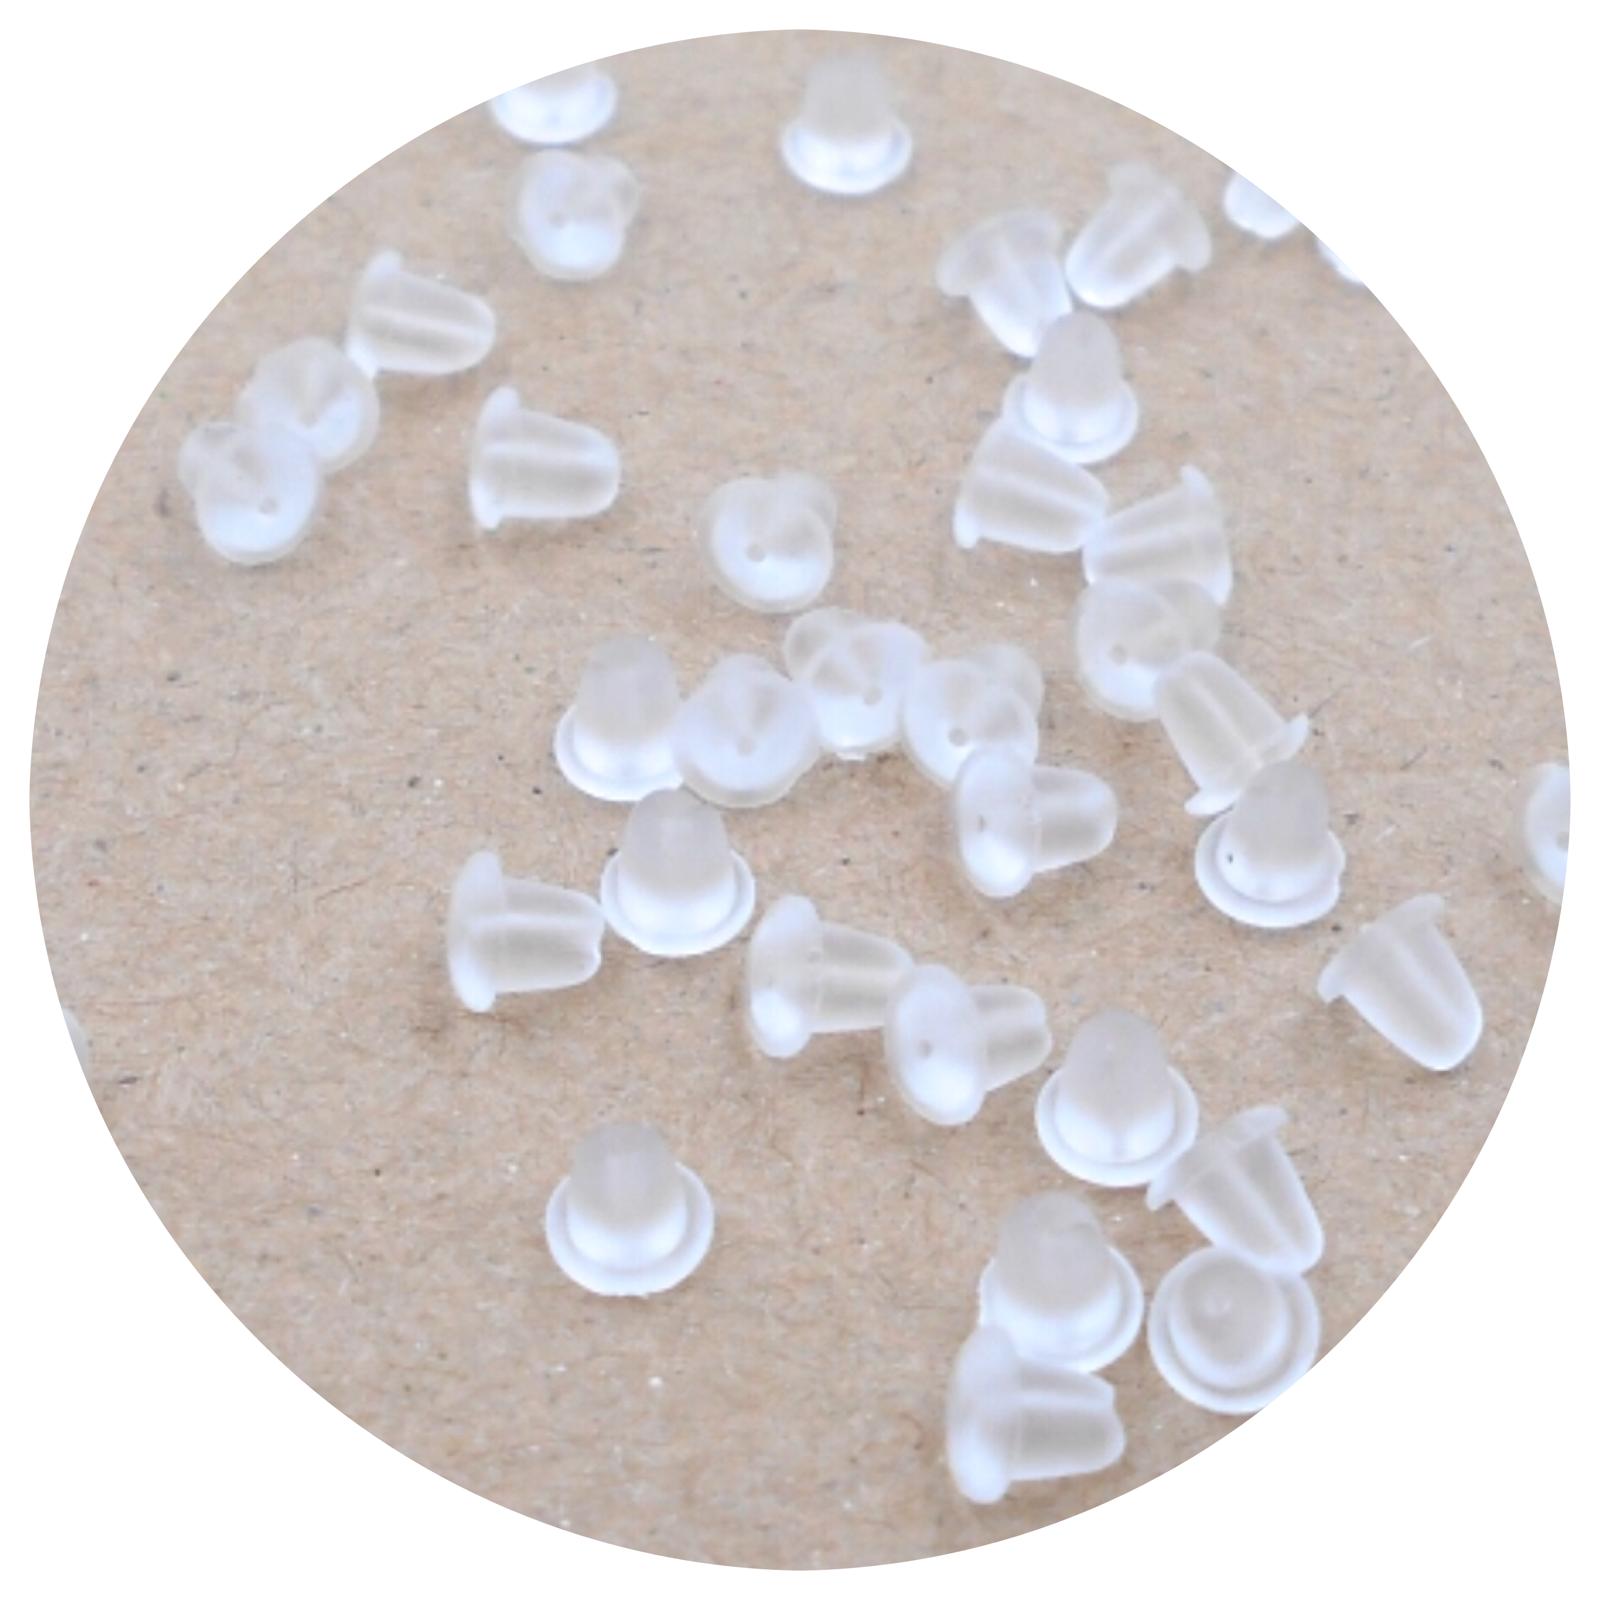 Silicone Clear Earring Backs - 100 pcs - AJ Craft Supplies